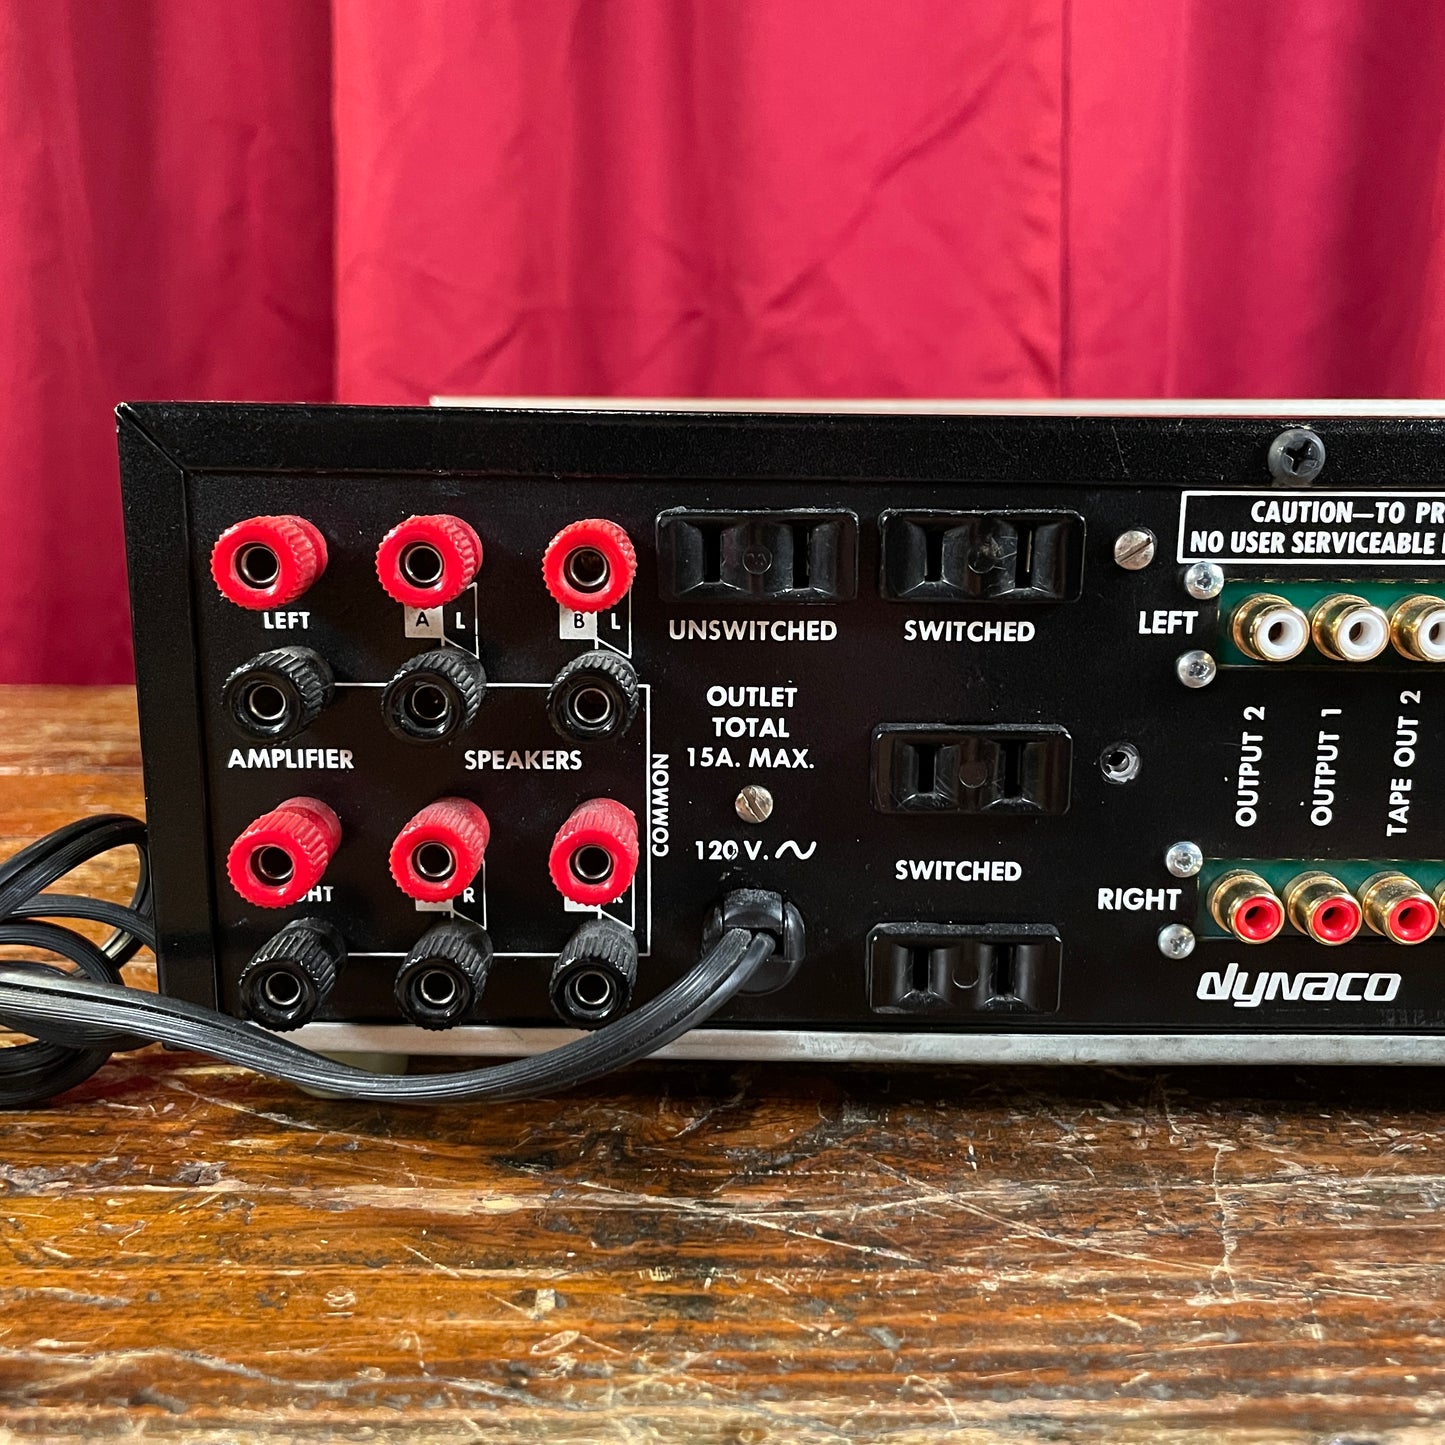 Dynaco PAT-5 Stereo Hi-Fi Preamplifier Pre Amp